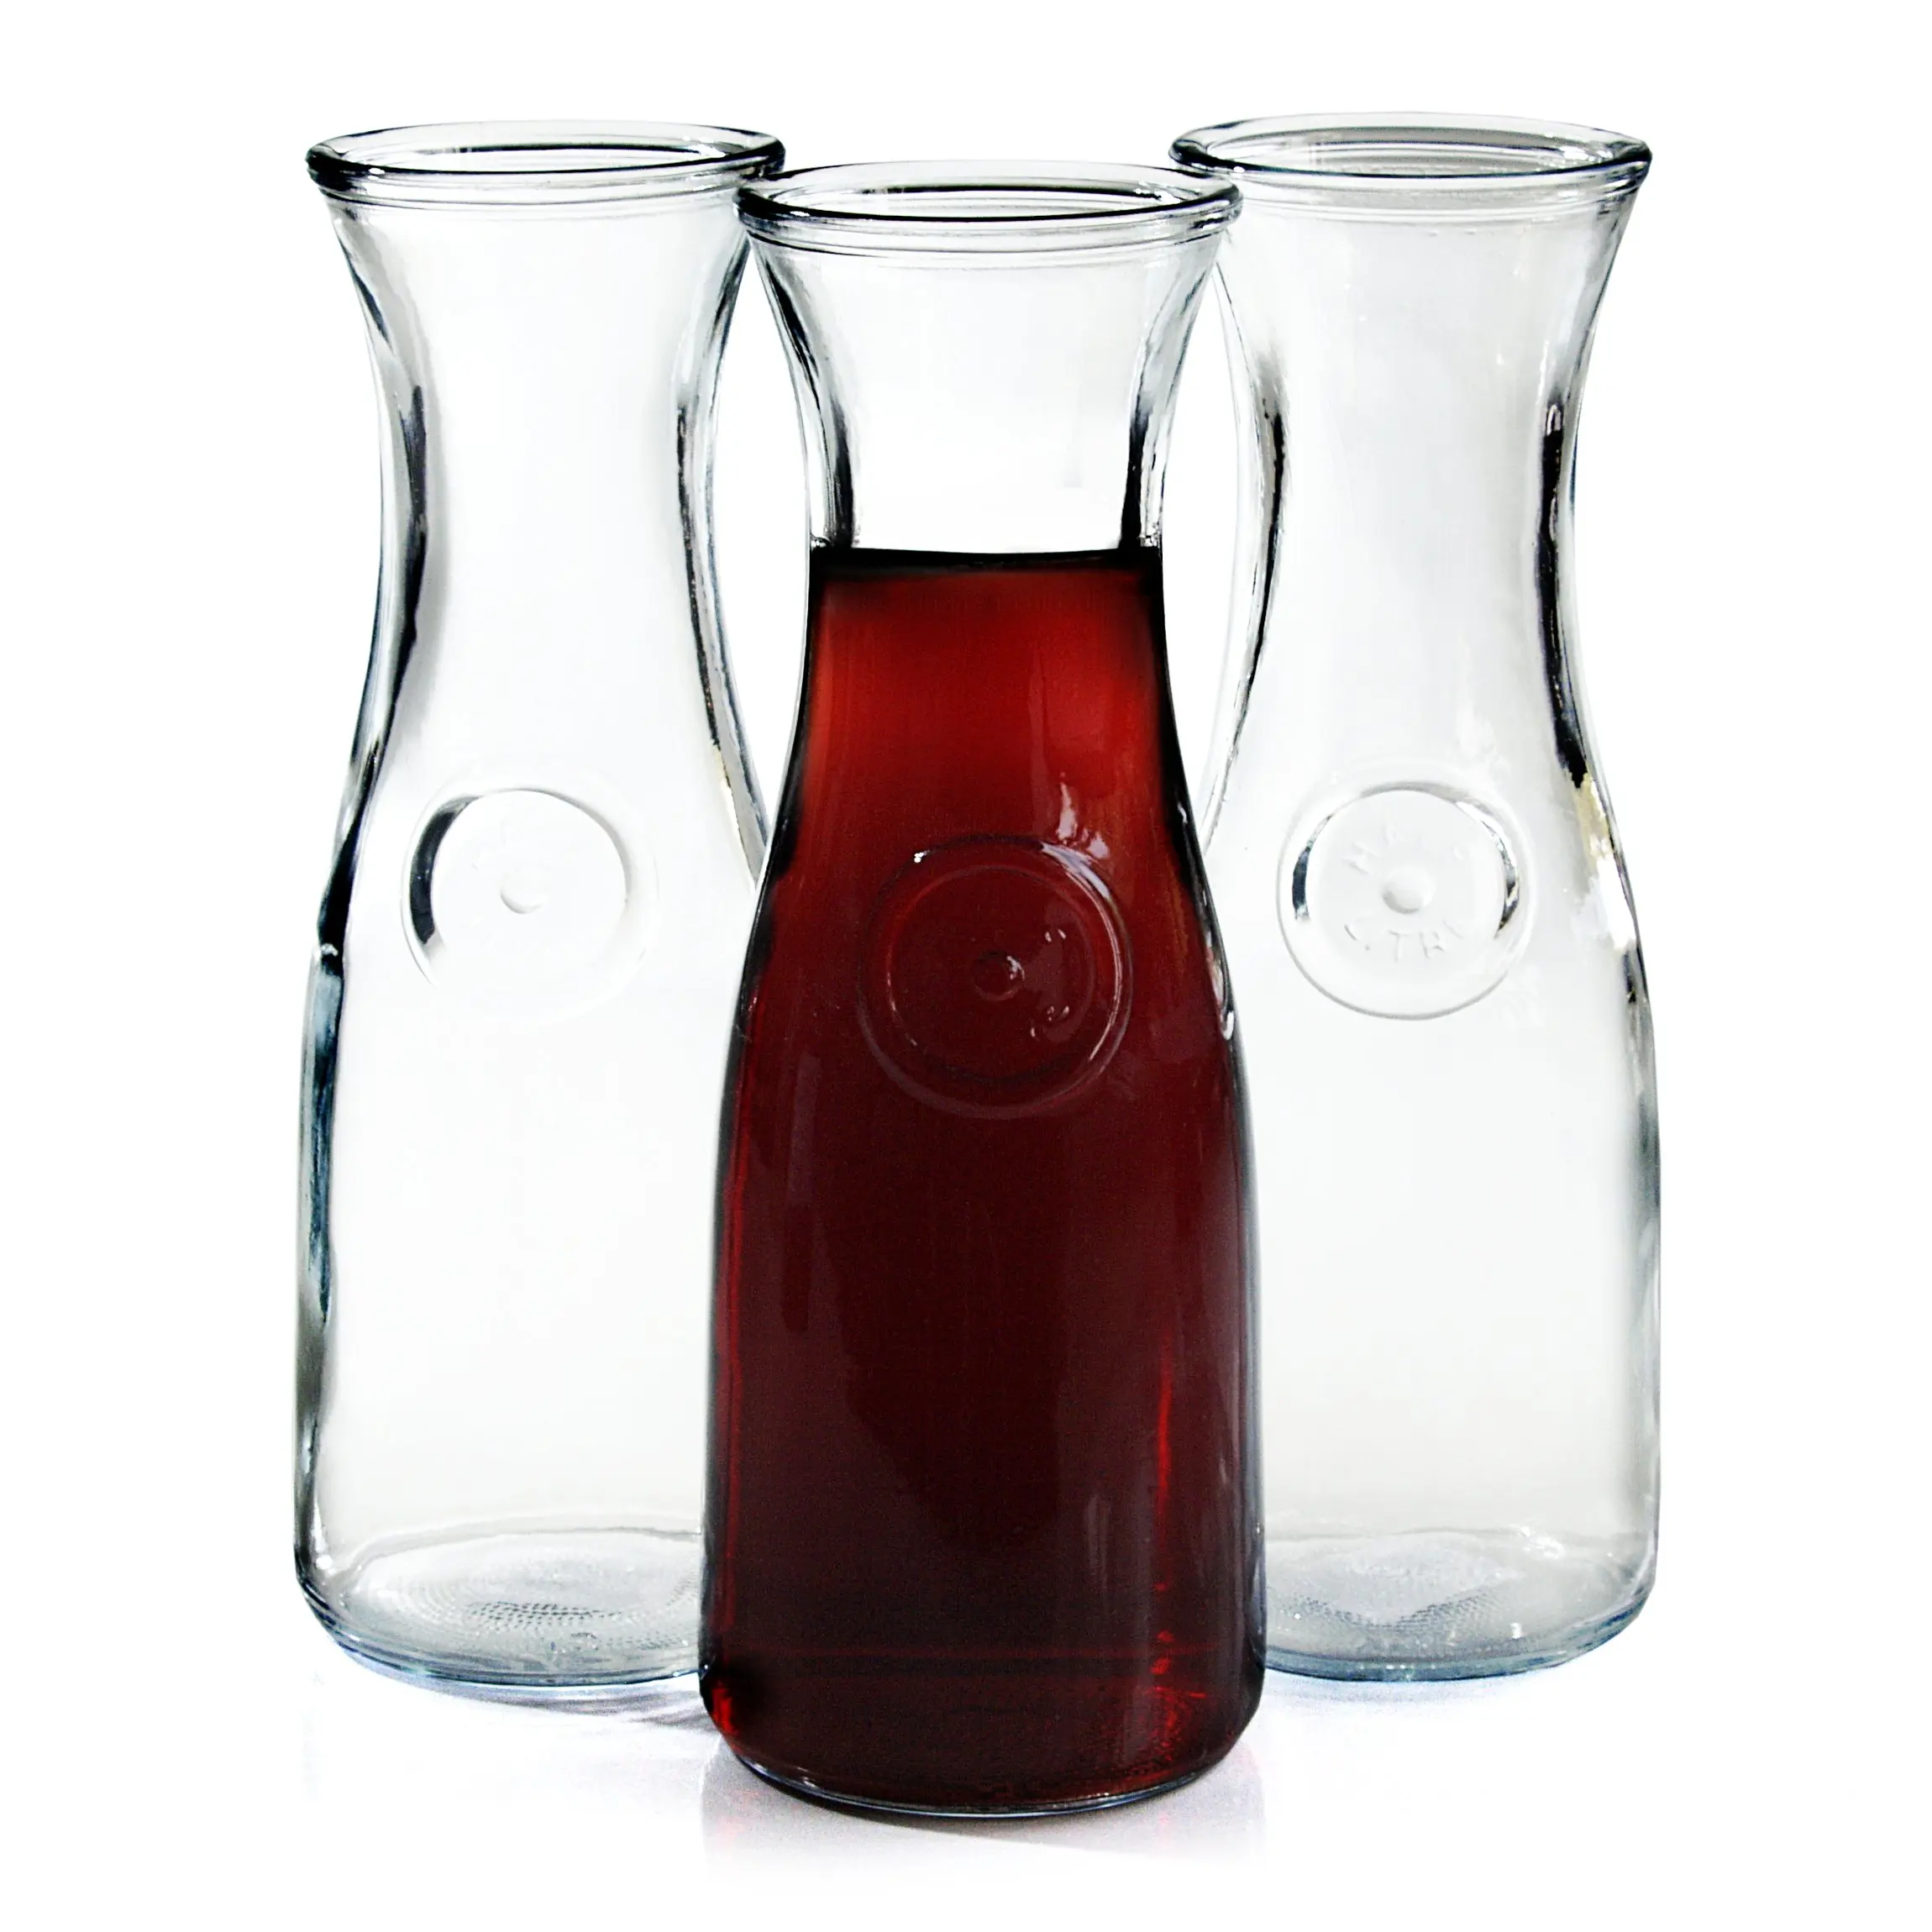 Anchor Hocking 0.5 Liter Glass Wine Carafe, Set of 3 